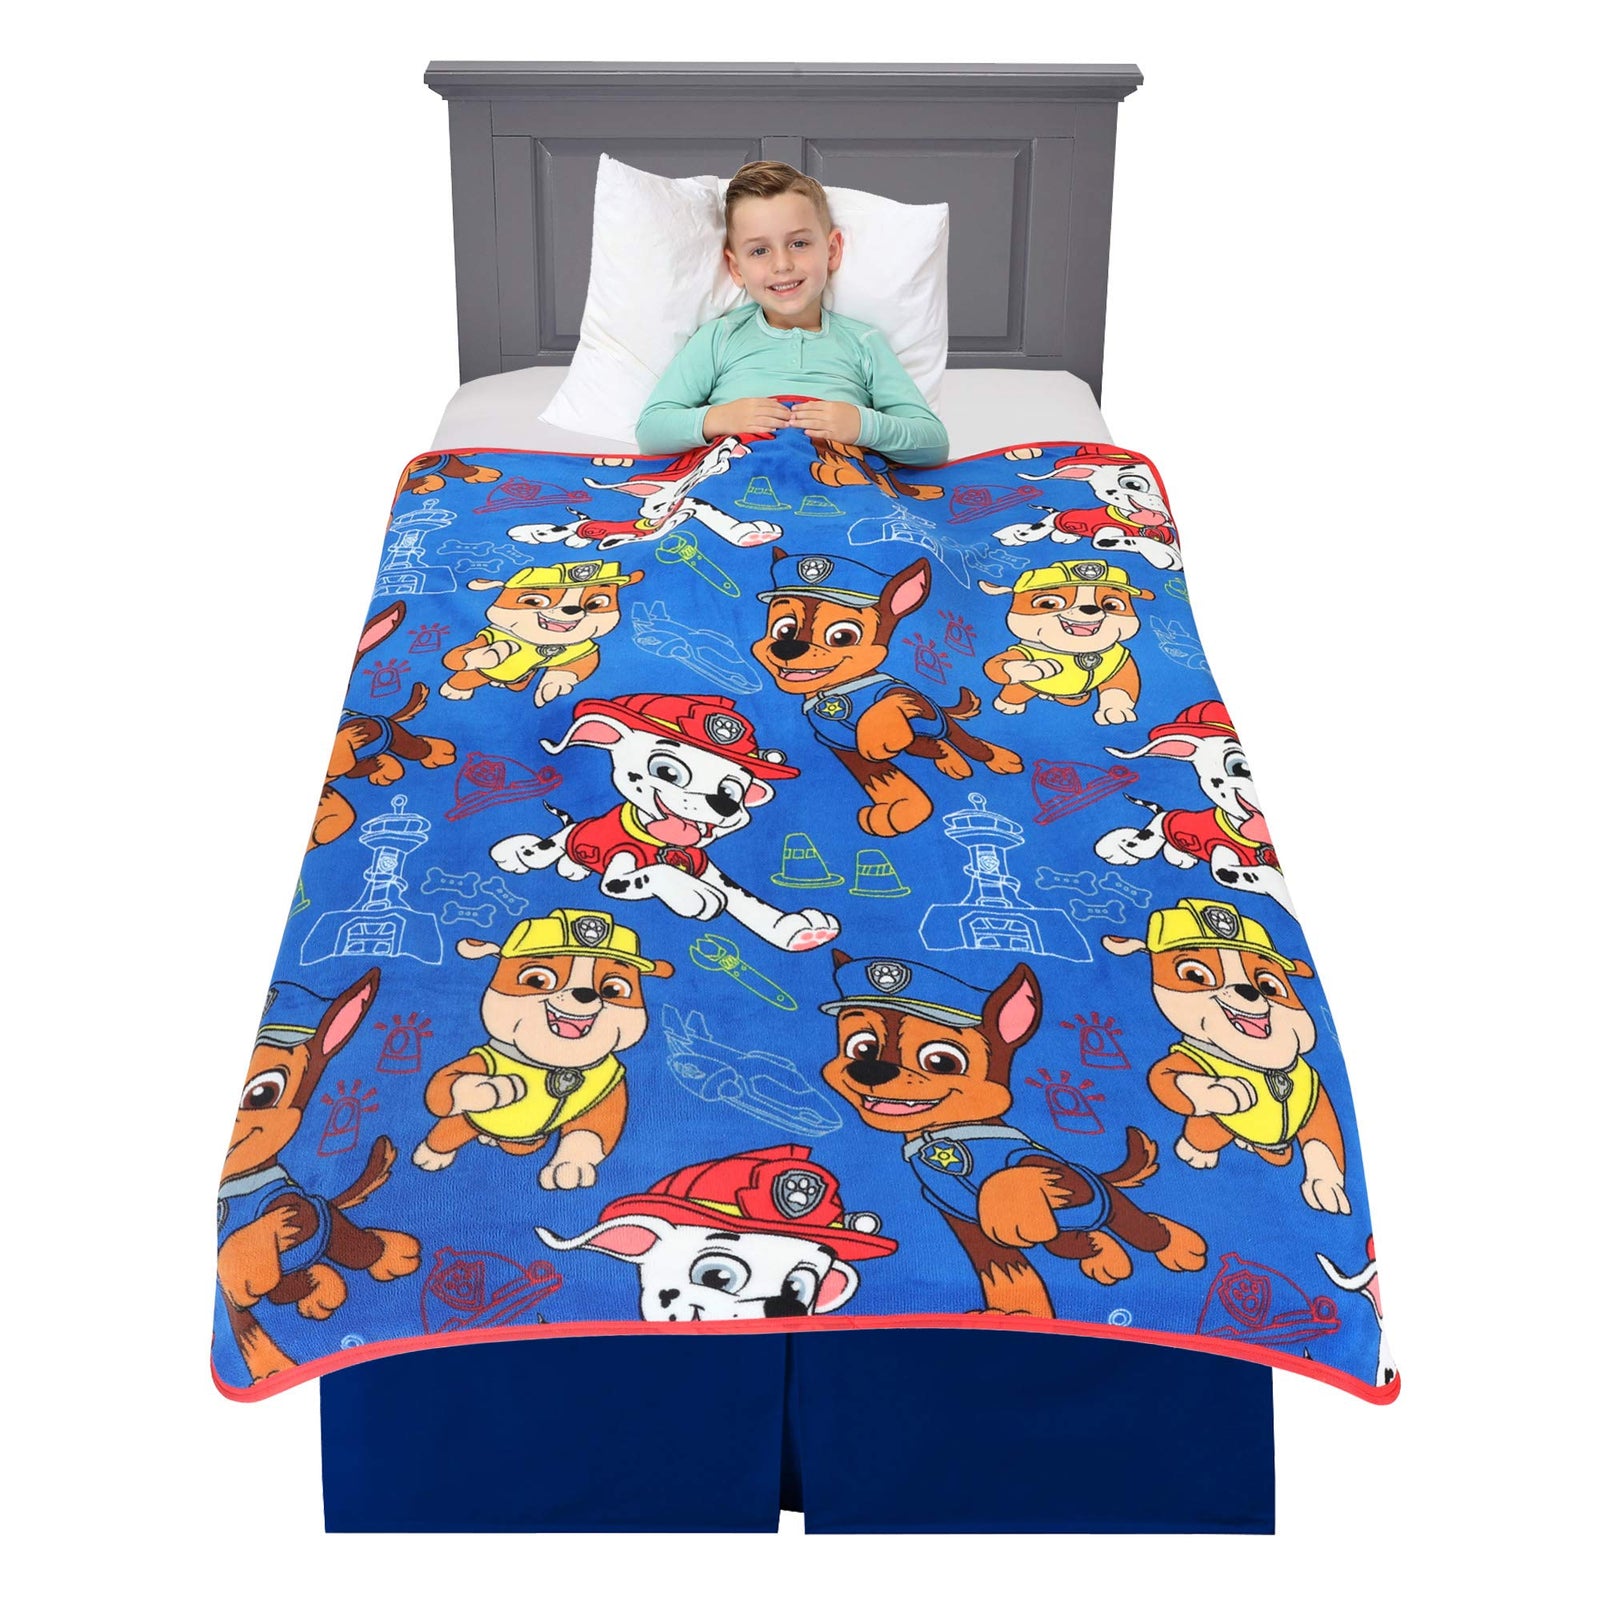 Franco Kids Bedding Super Soft Plush Throw Blanket, 46" x 60", Paw Patrol